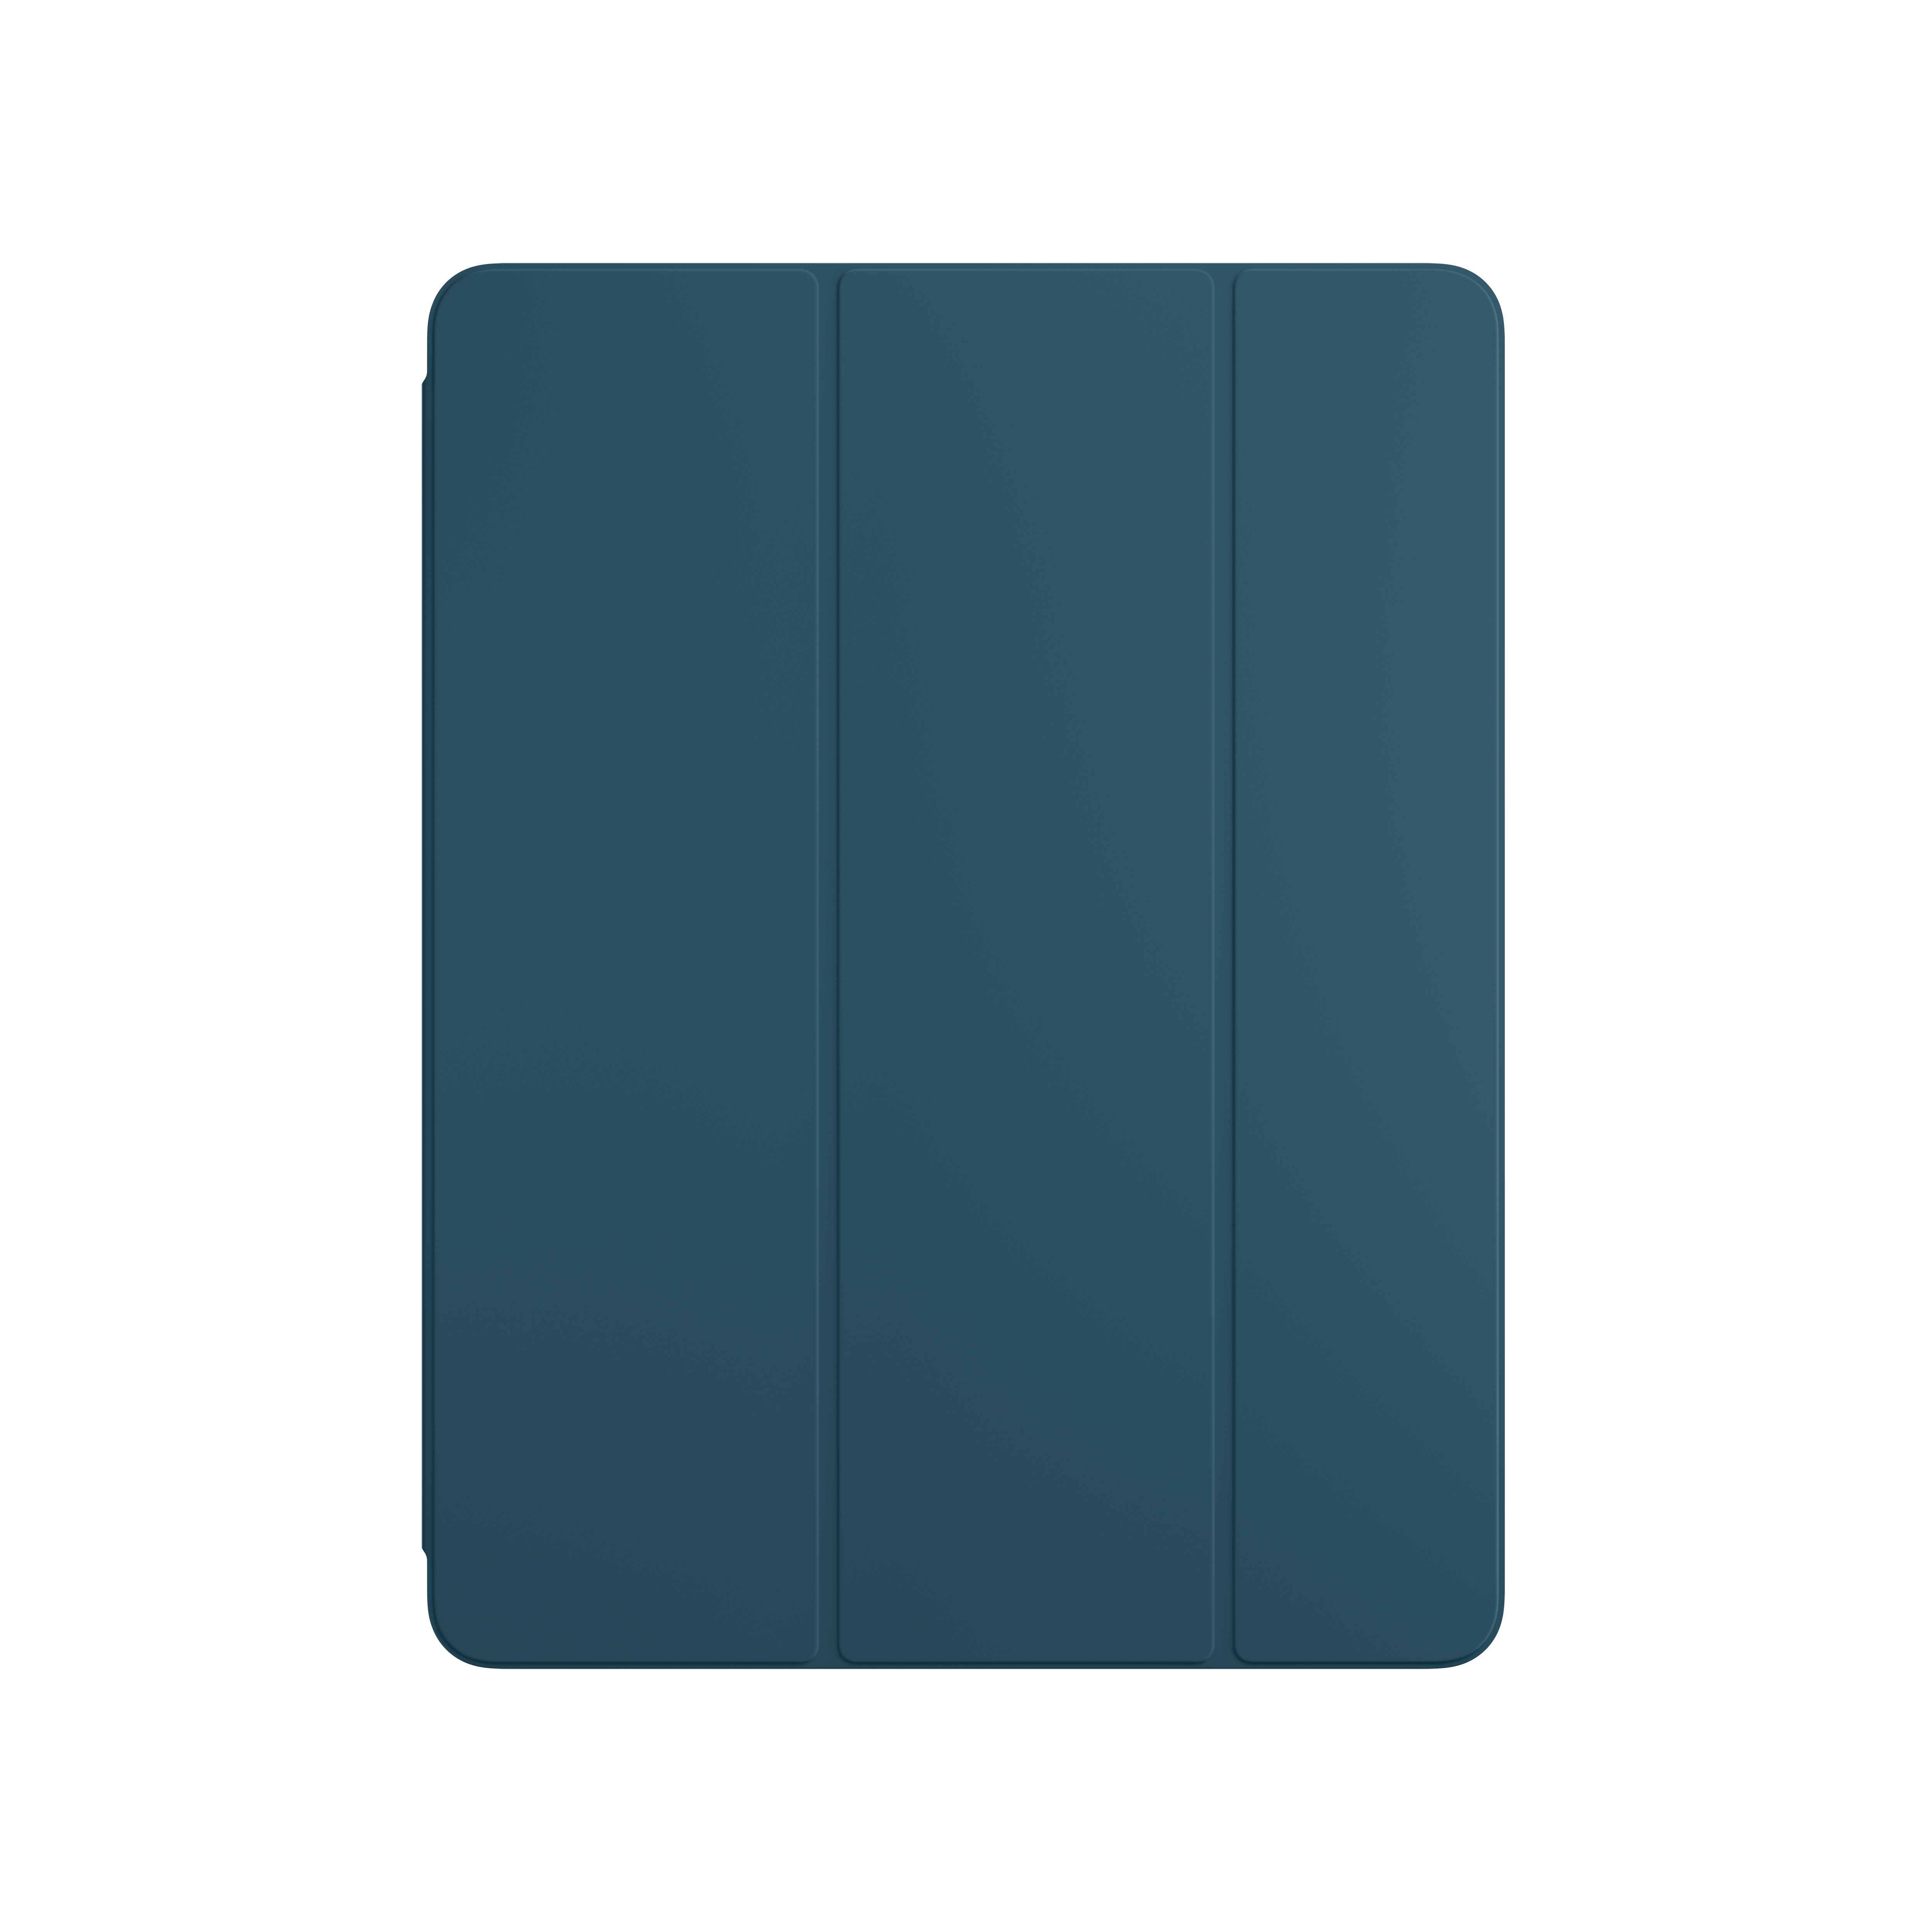  Smart Folio for iPad Pro 12.9-inch 6th generation - Marine Blue